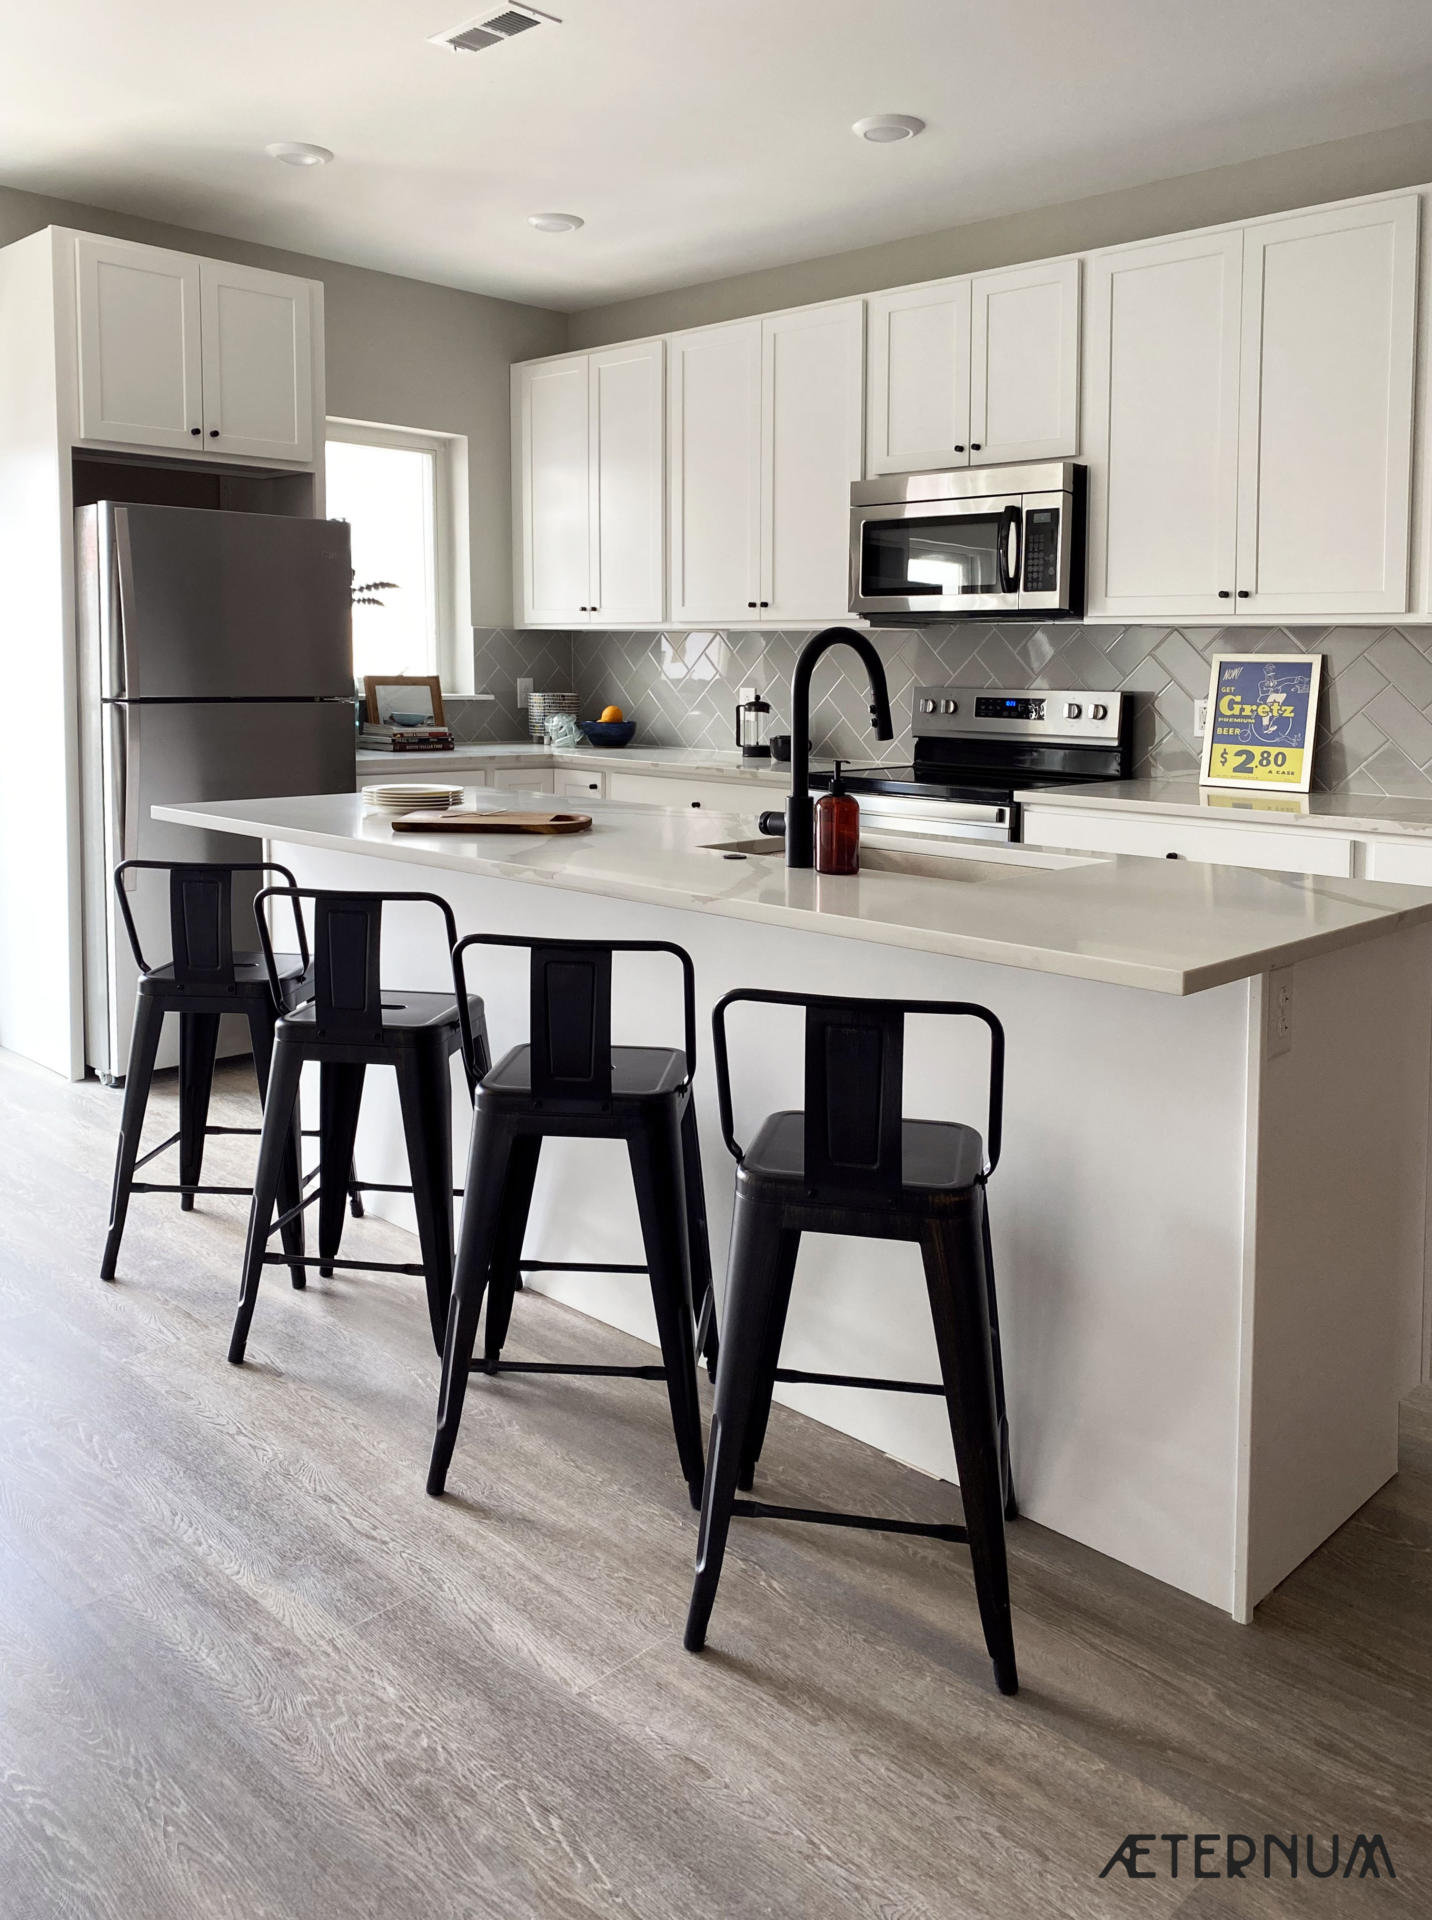 Hospitality casegood kitchen island by custom manufacturer Morgan Li 